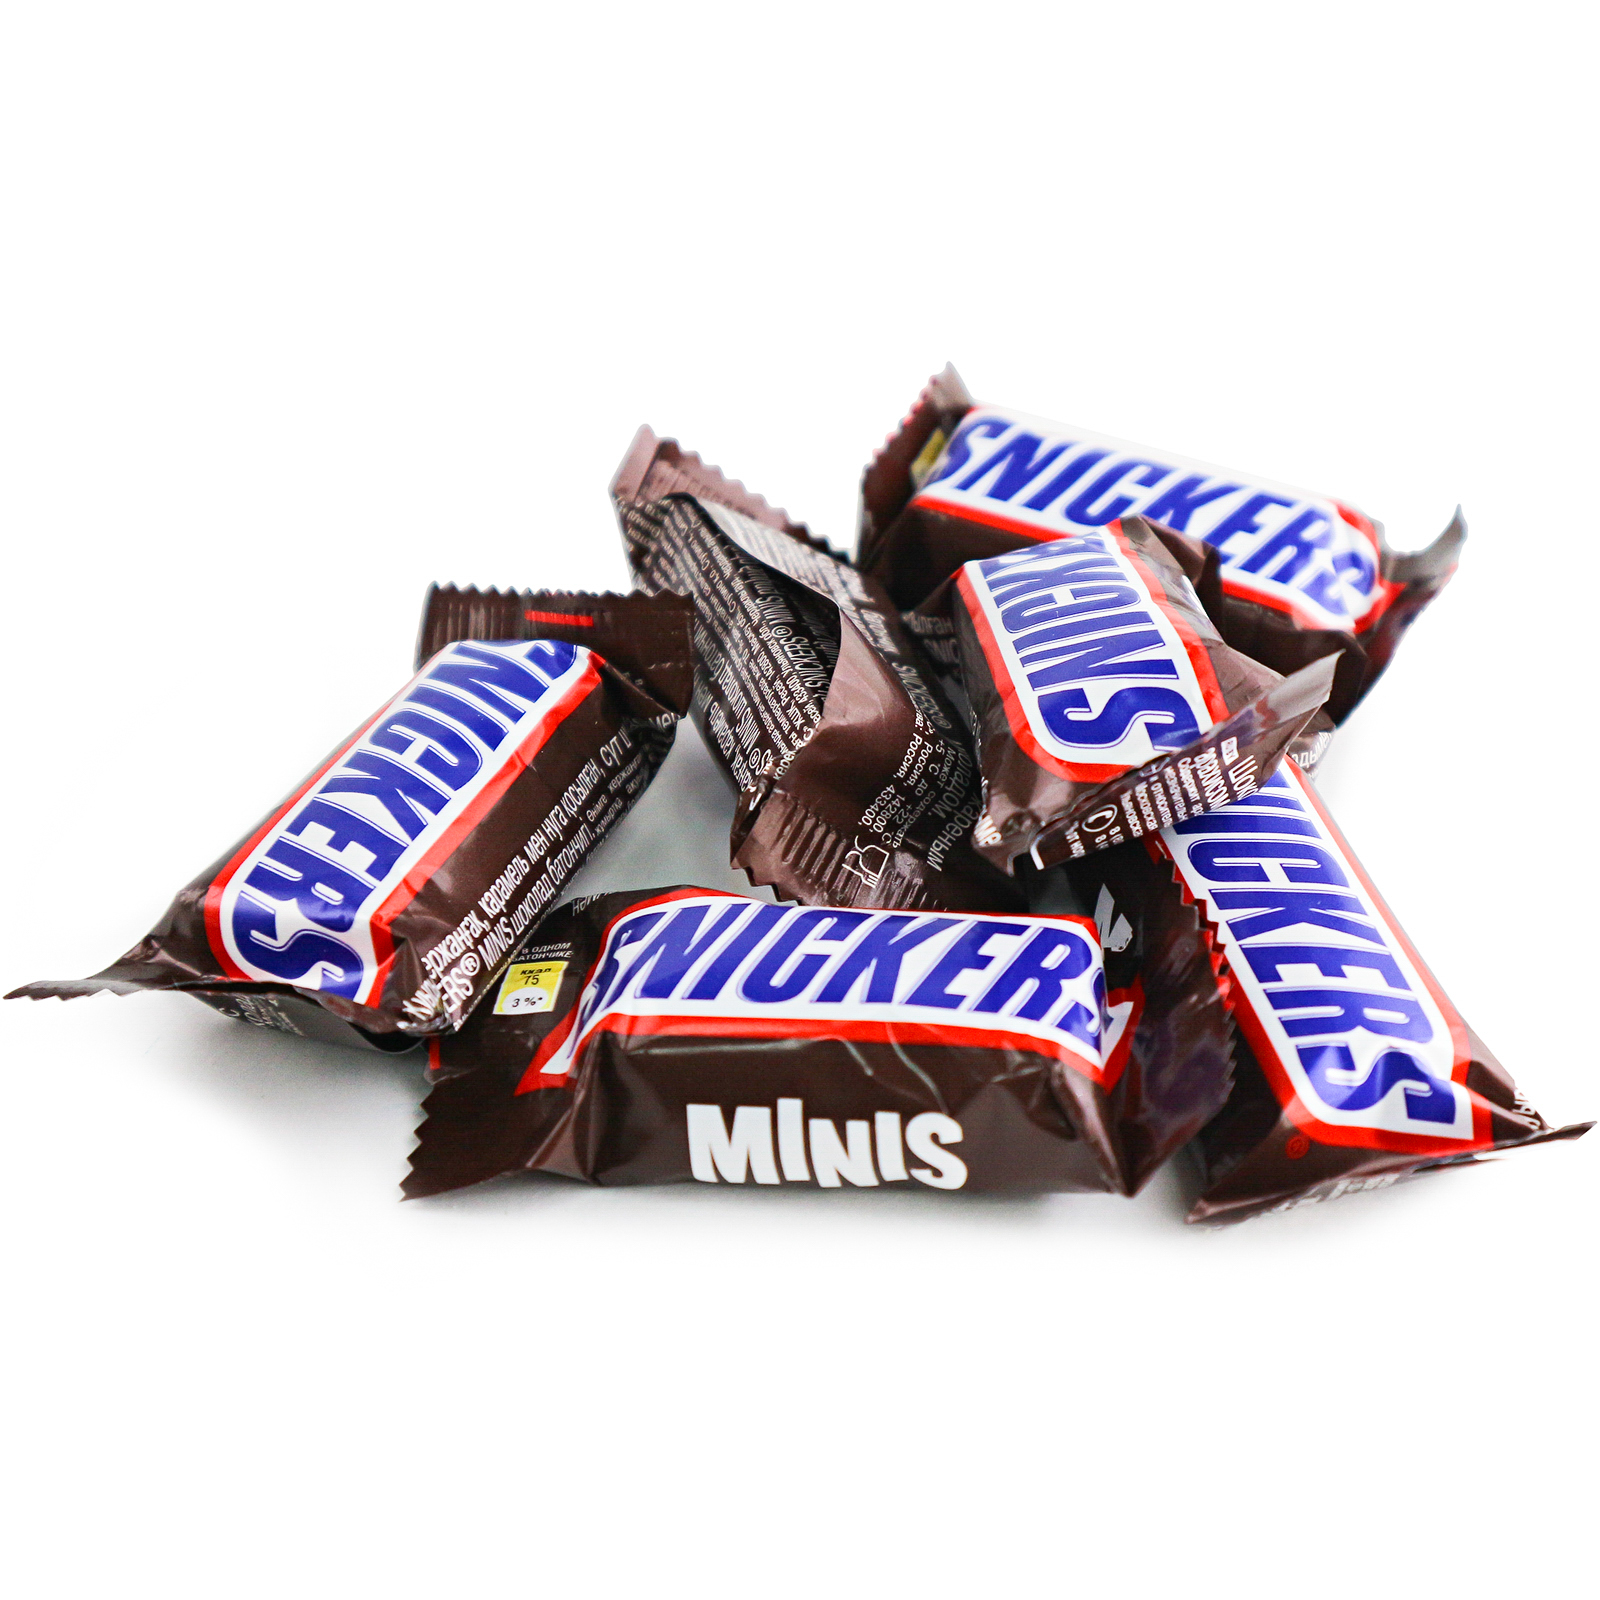 Snickers Minis батончик